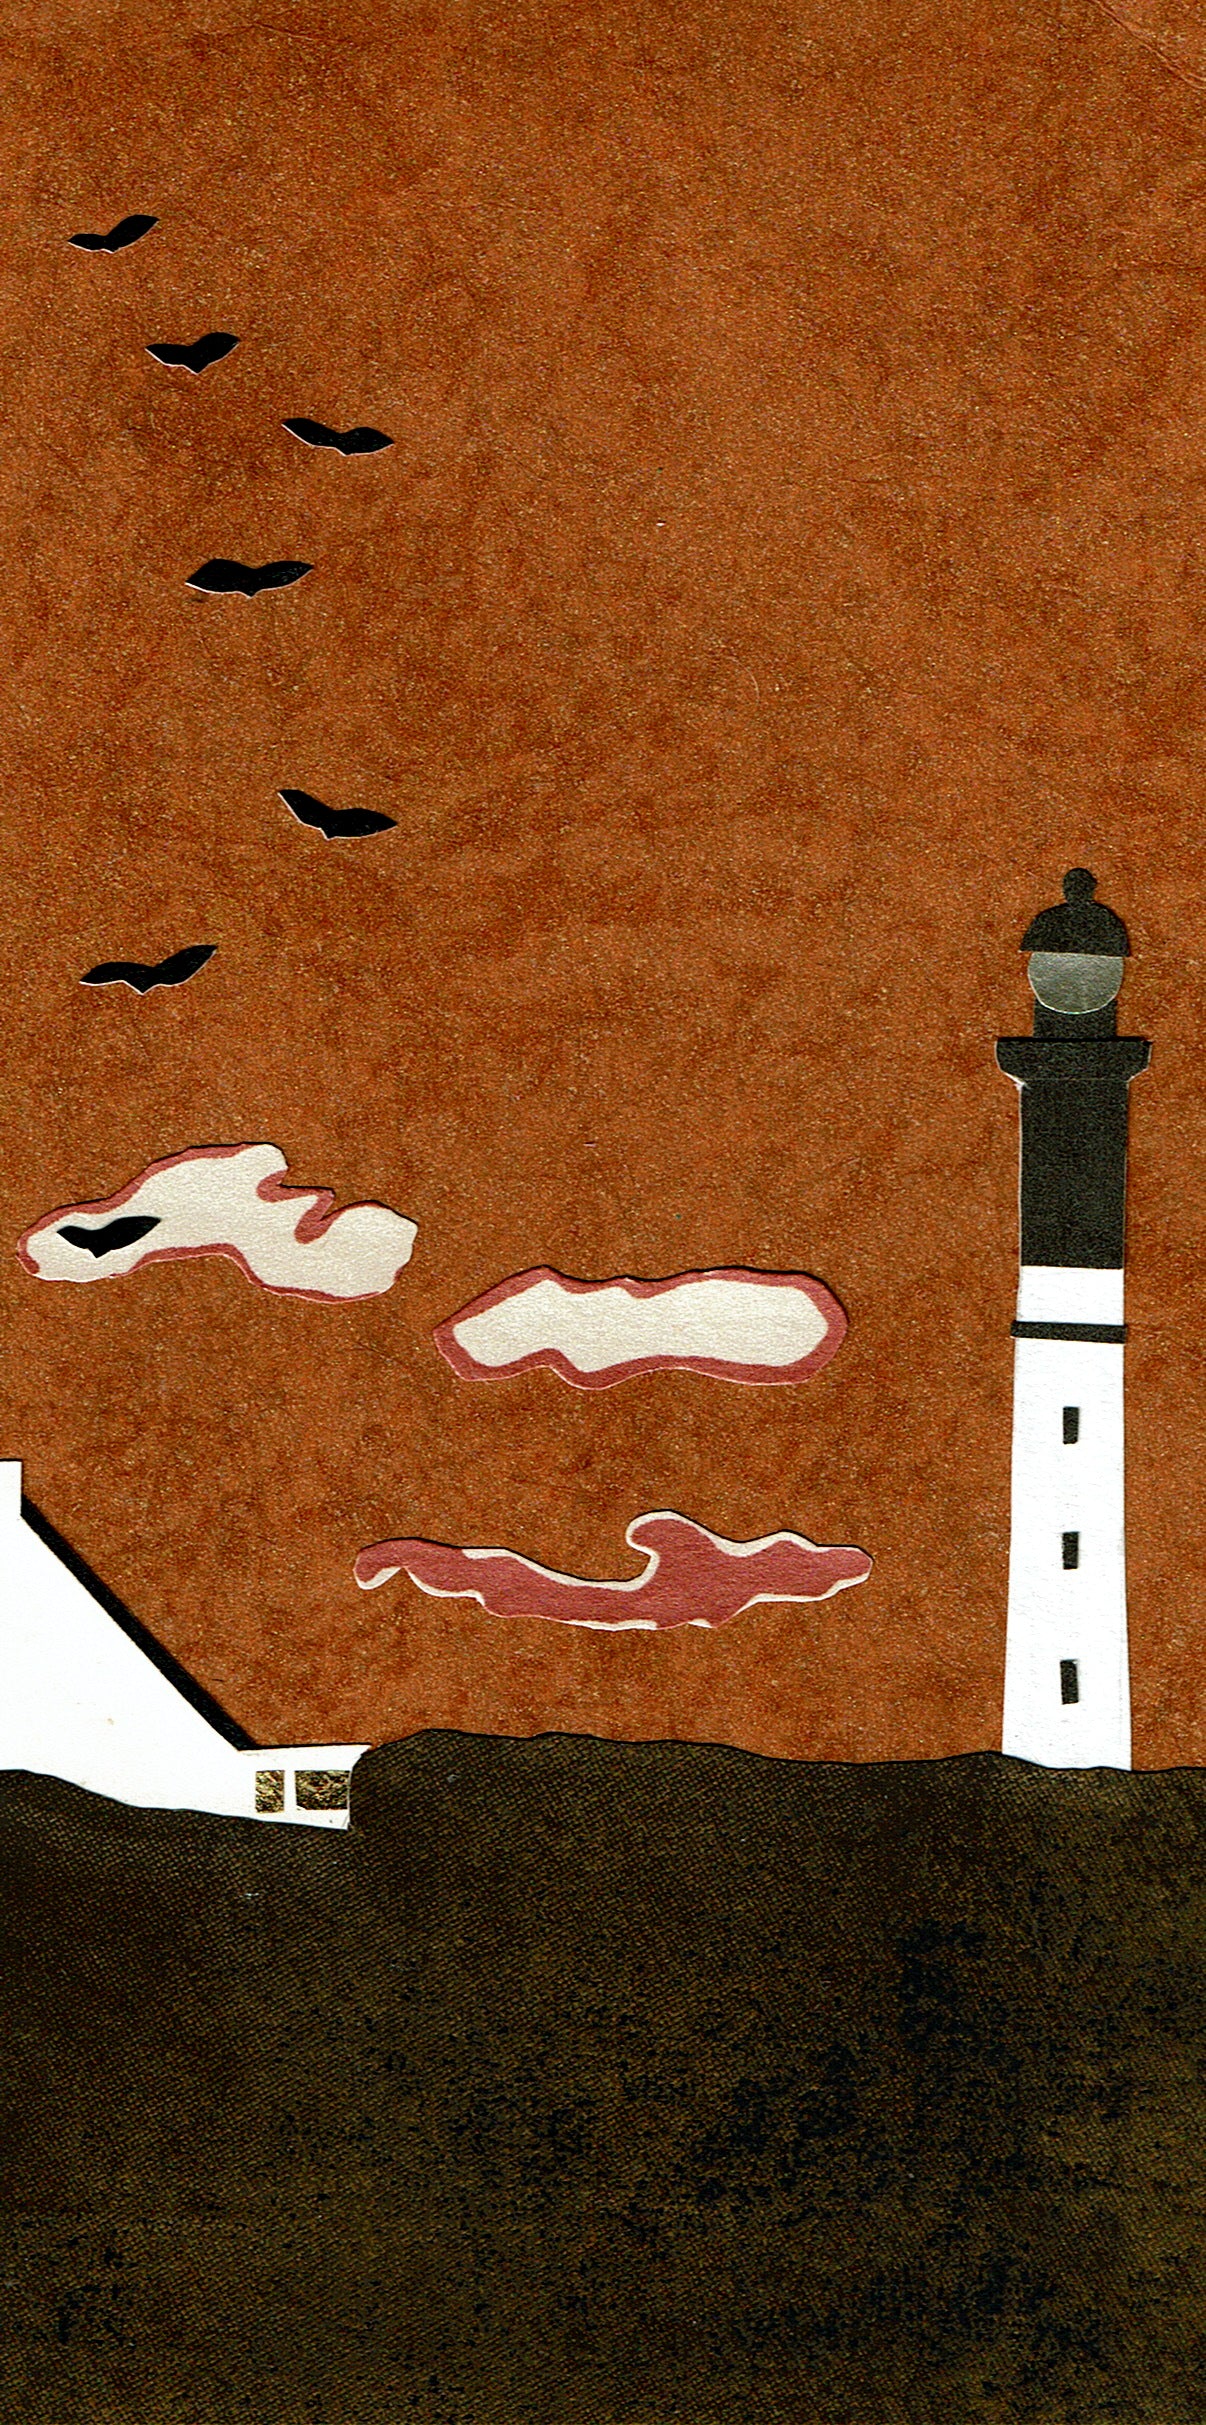 Grand phare - île de Sein